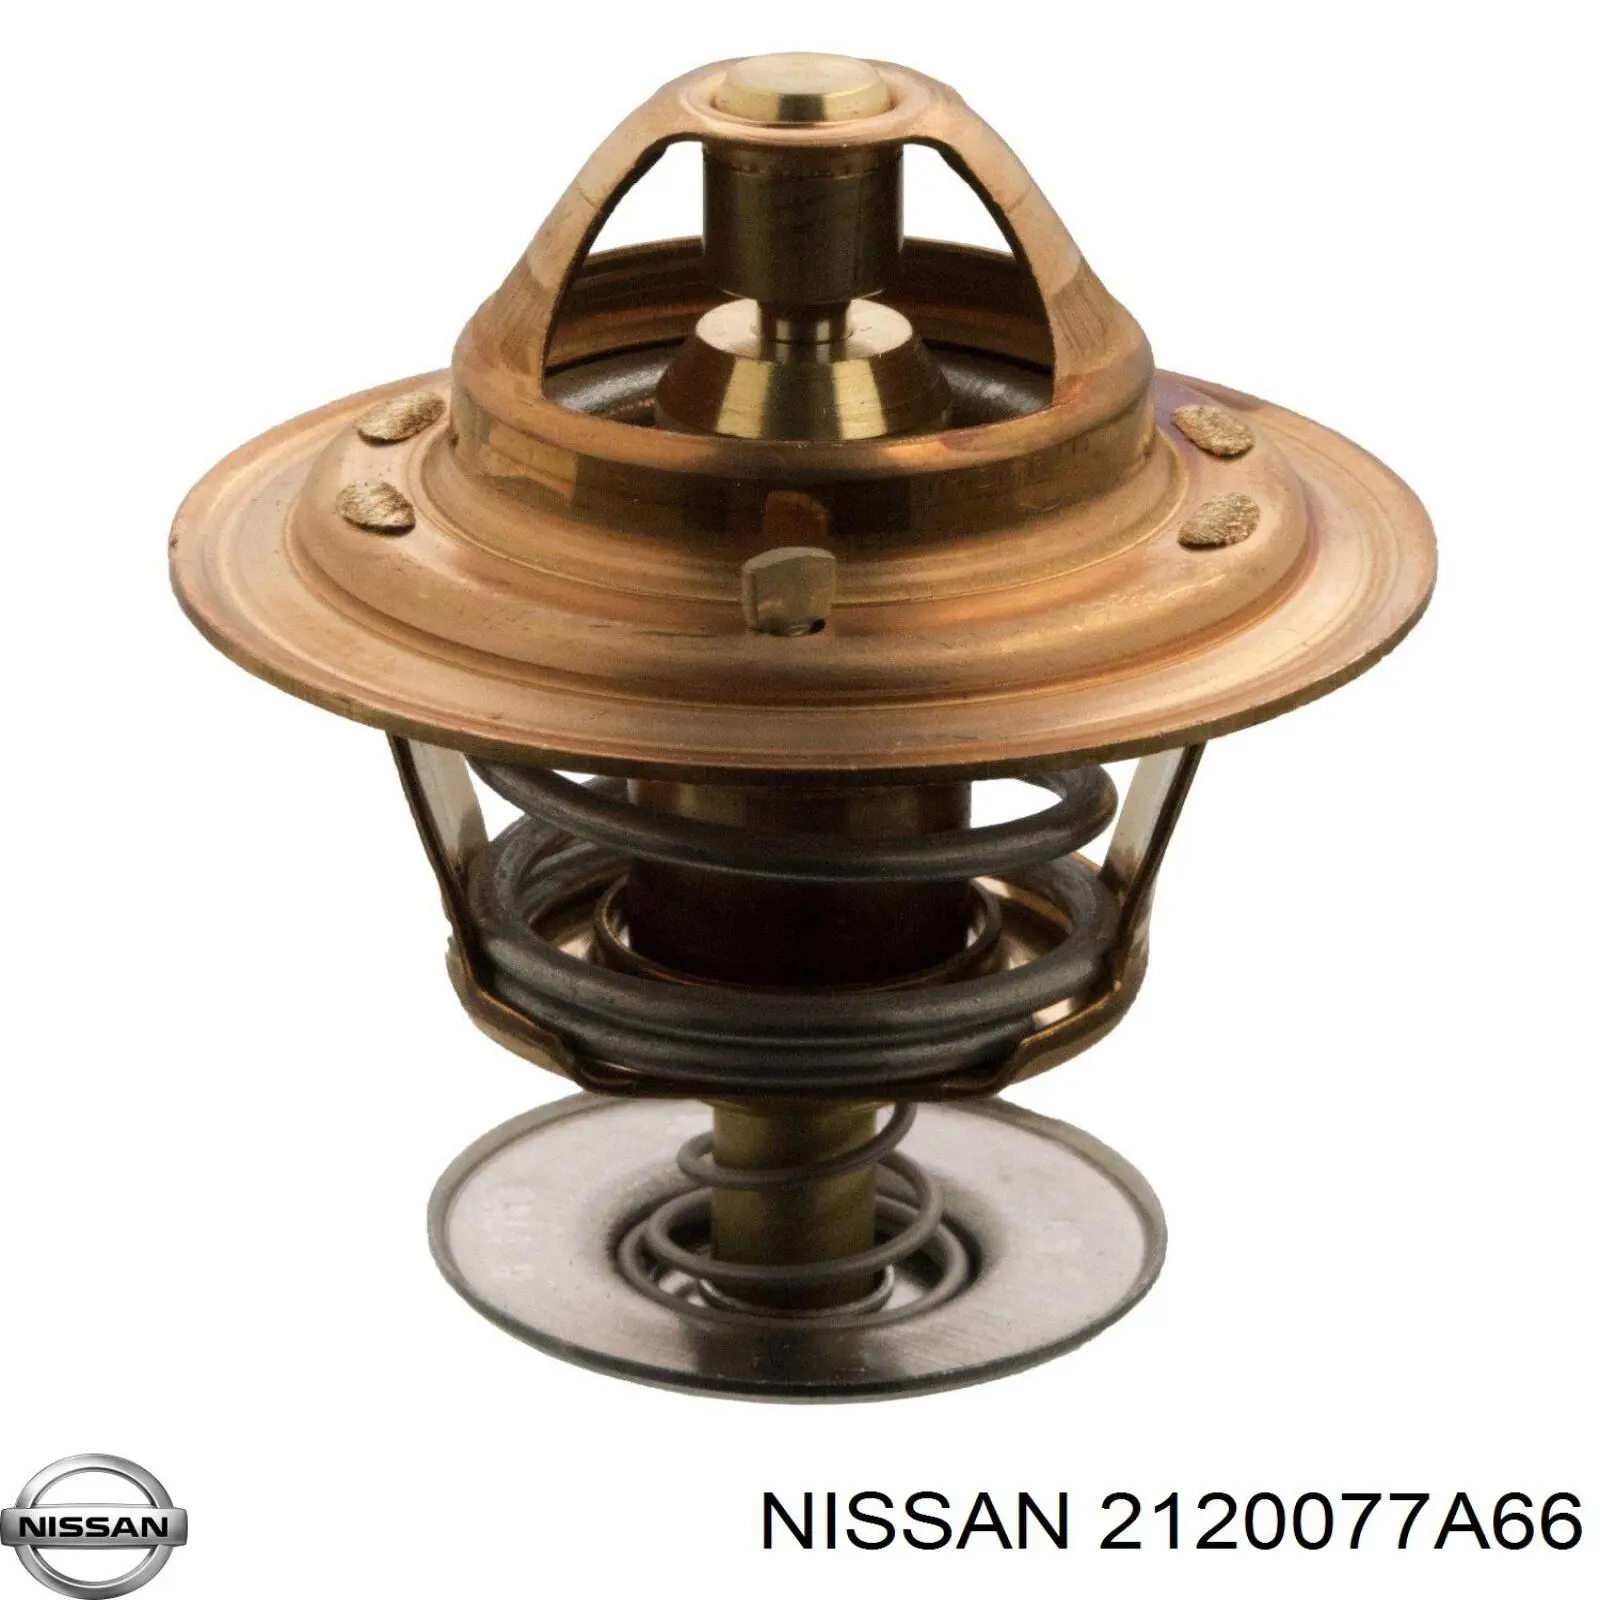 2120077A66 Nissan termostato